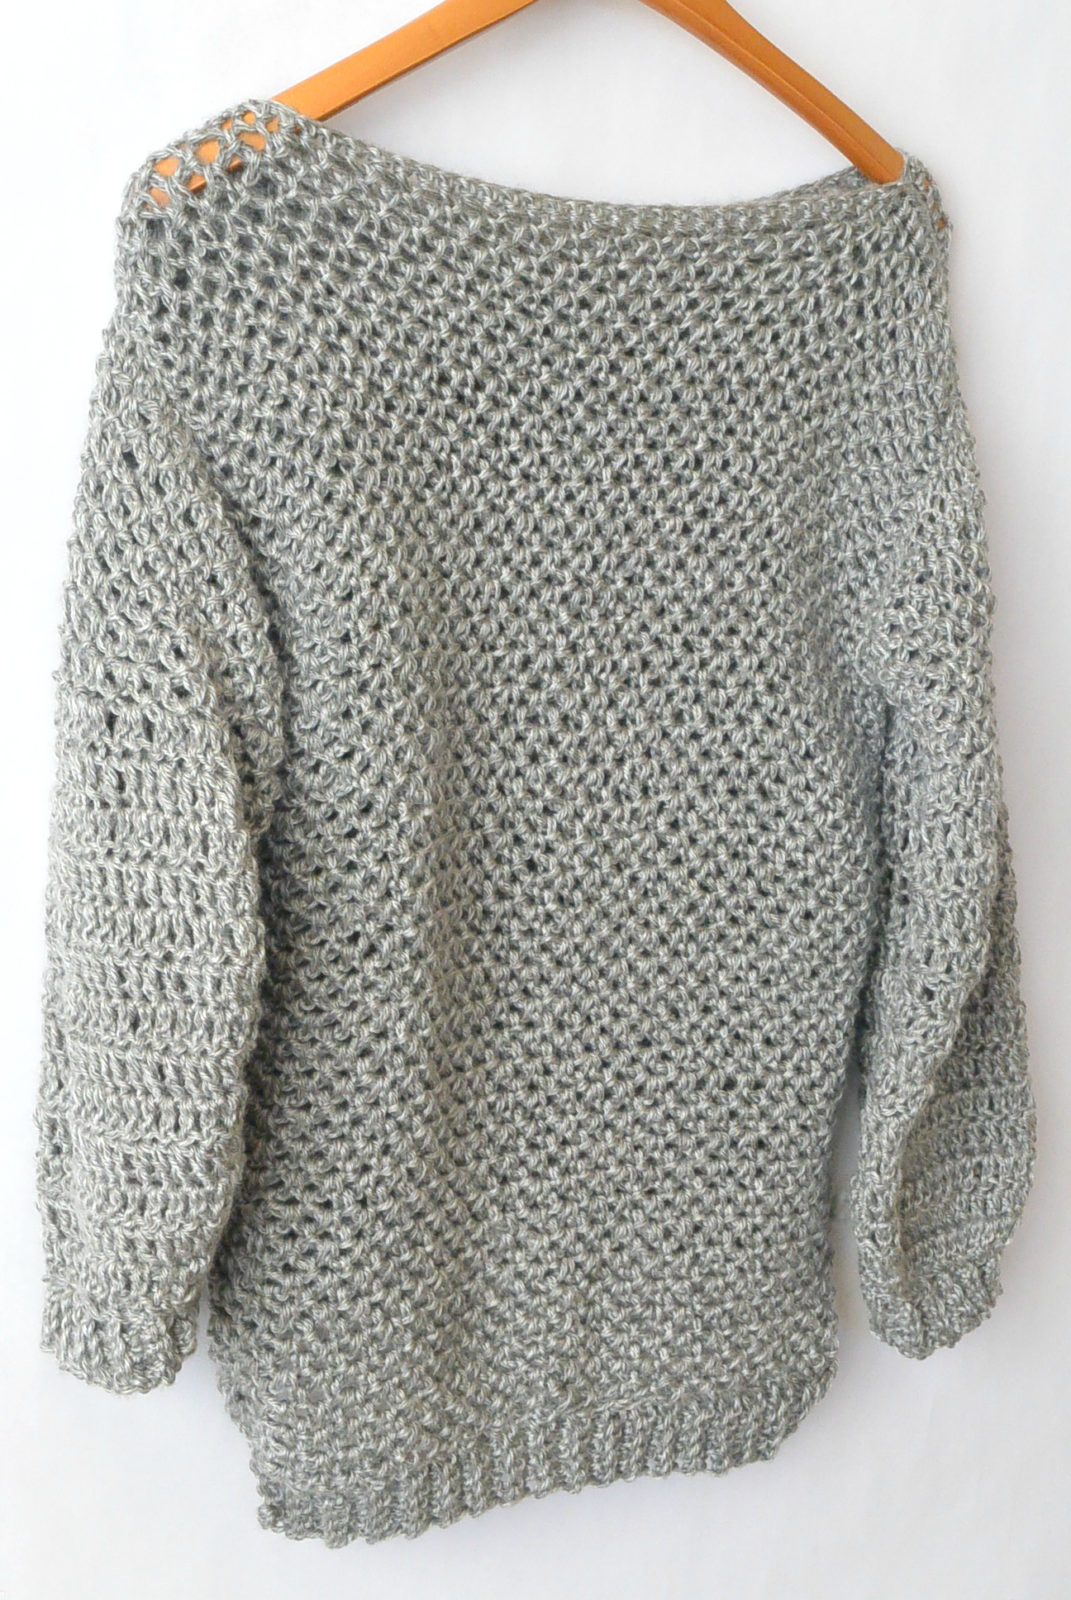 Crochet Sweater Patterns For Beginners